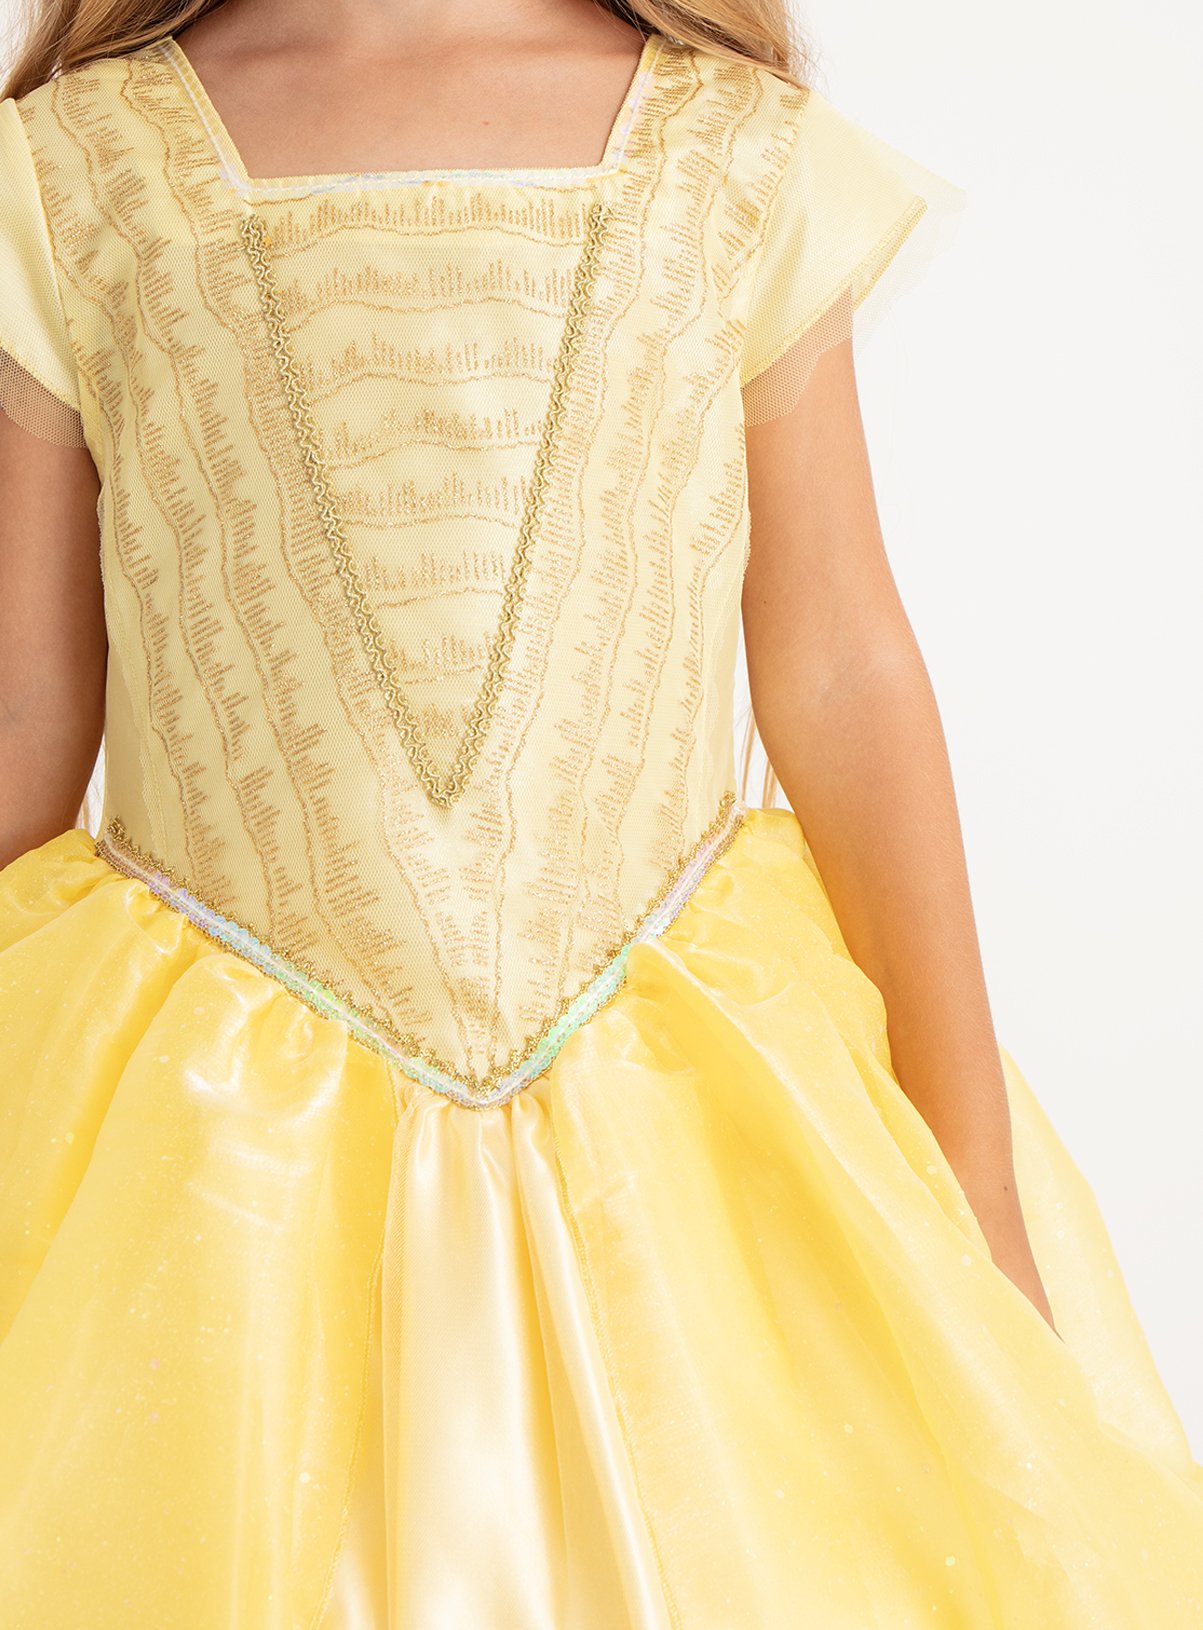 Disney Princess Belle Yellow Costume Review